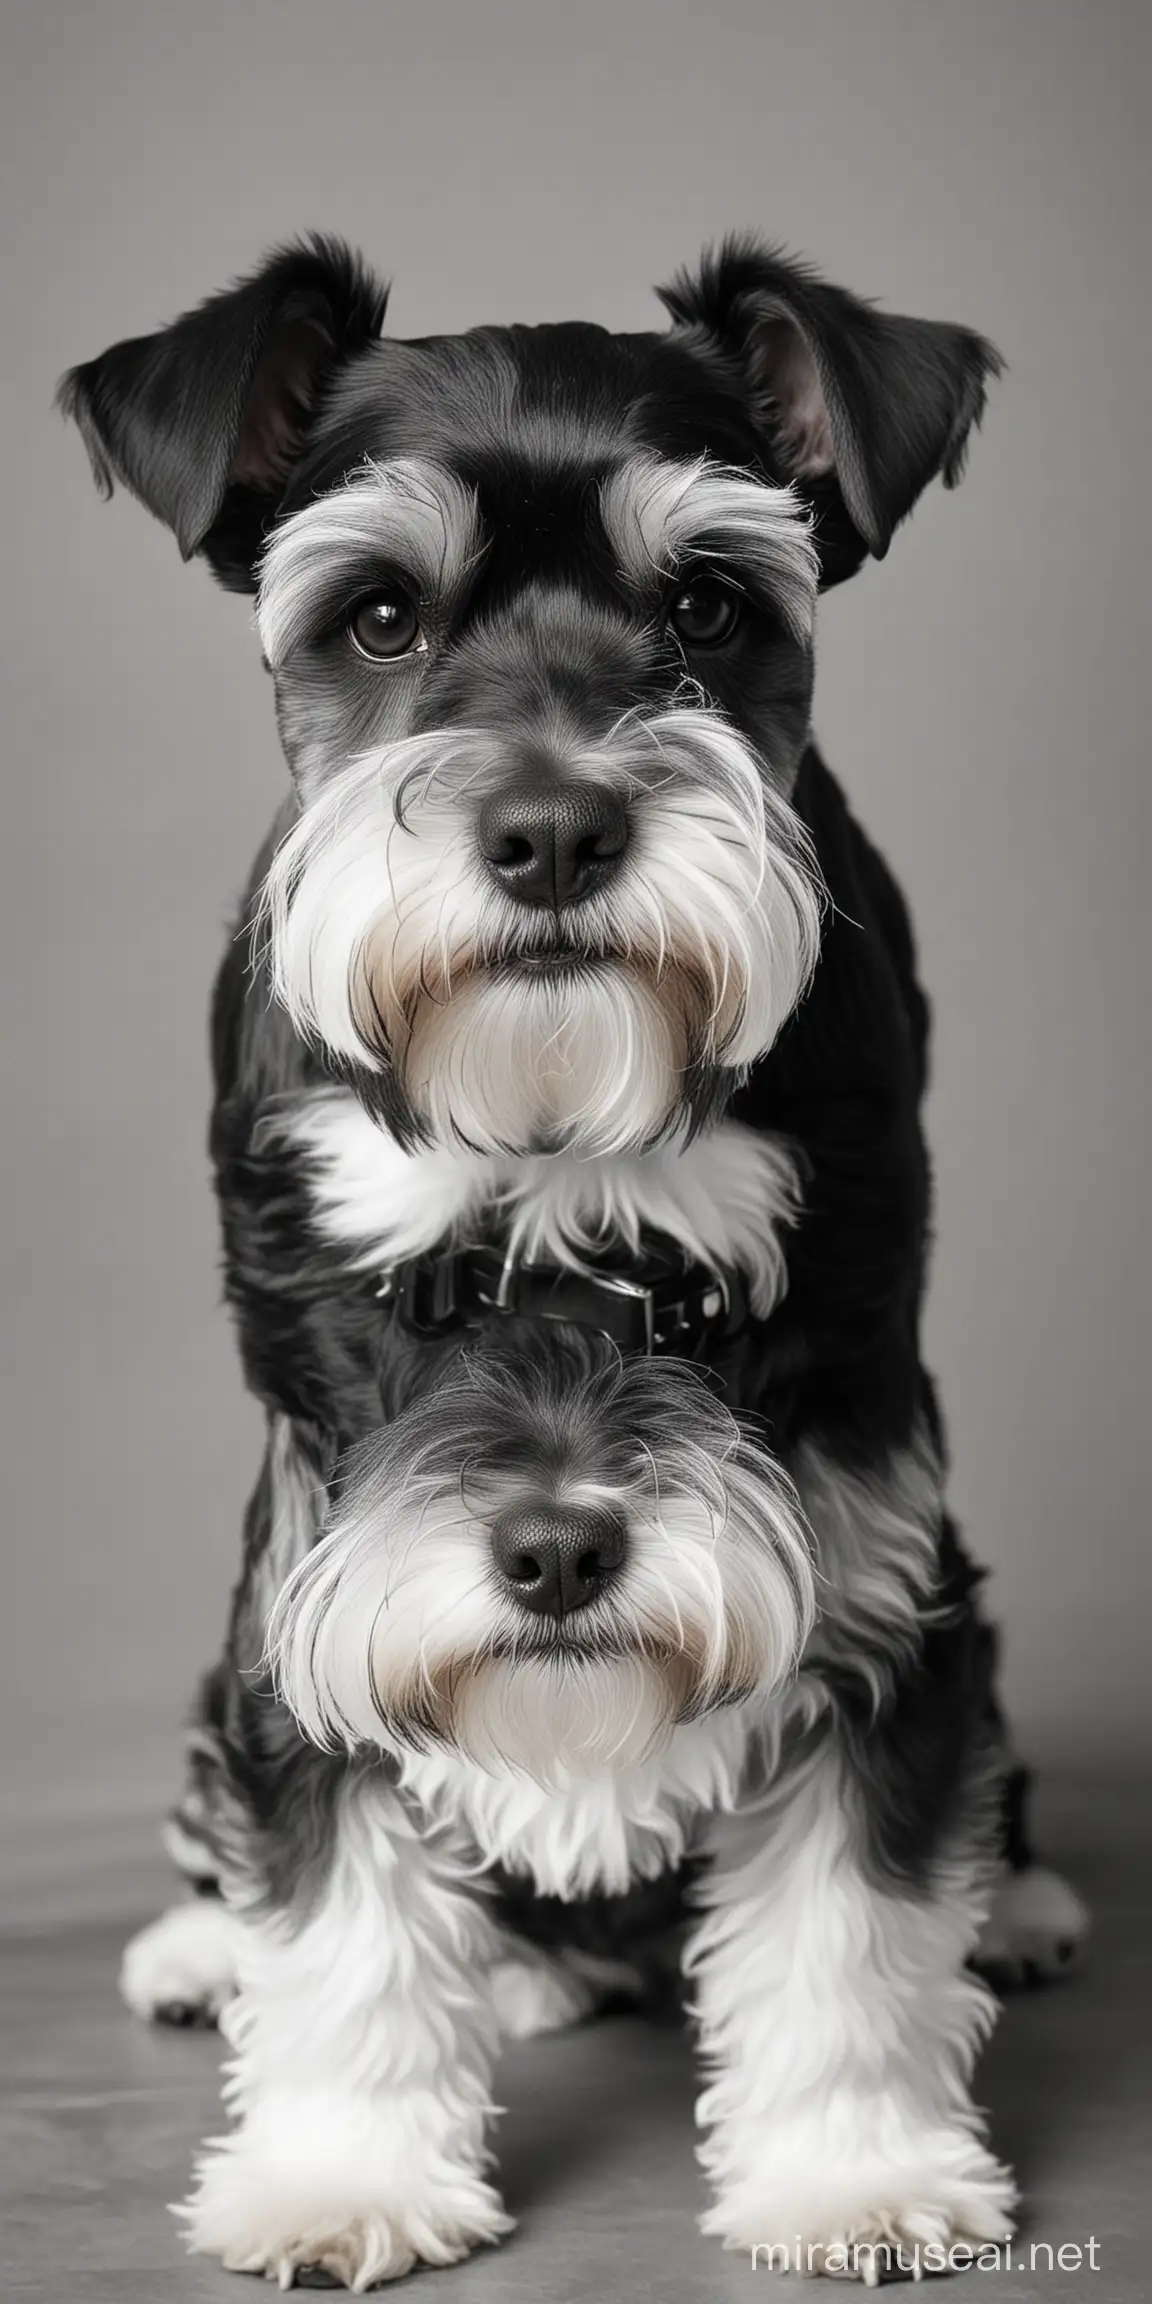 cute schnauzer
dog
black and white
